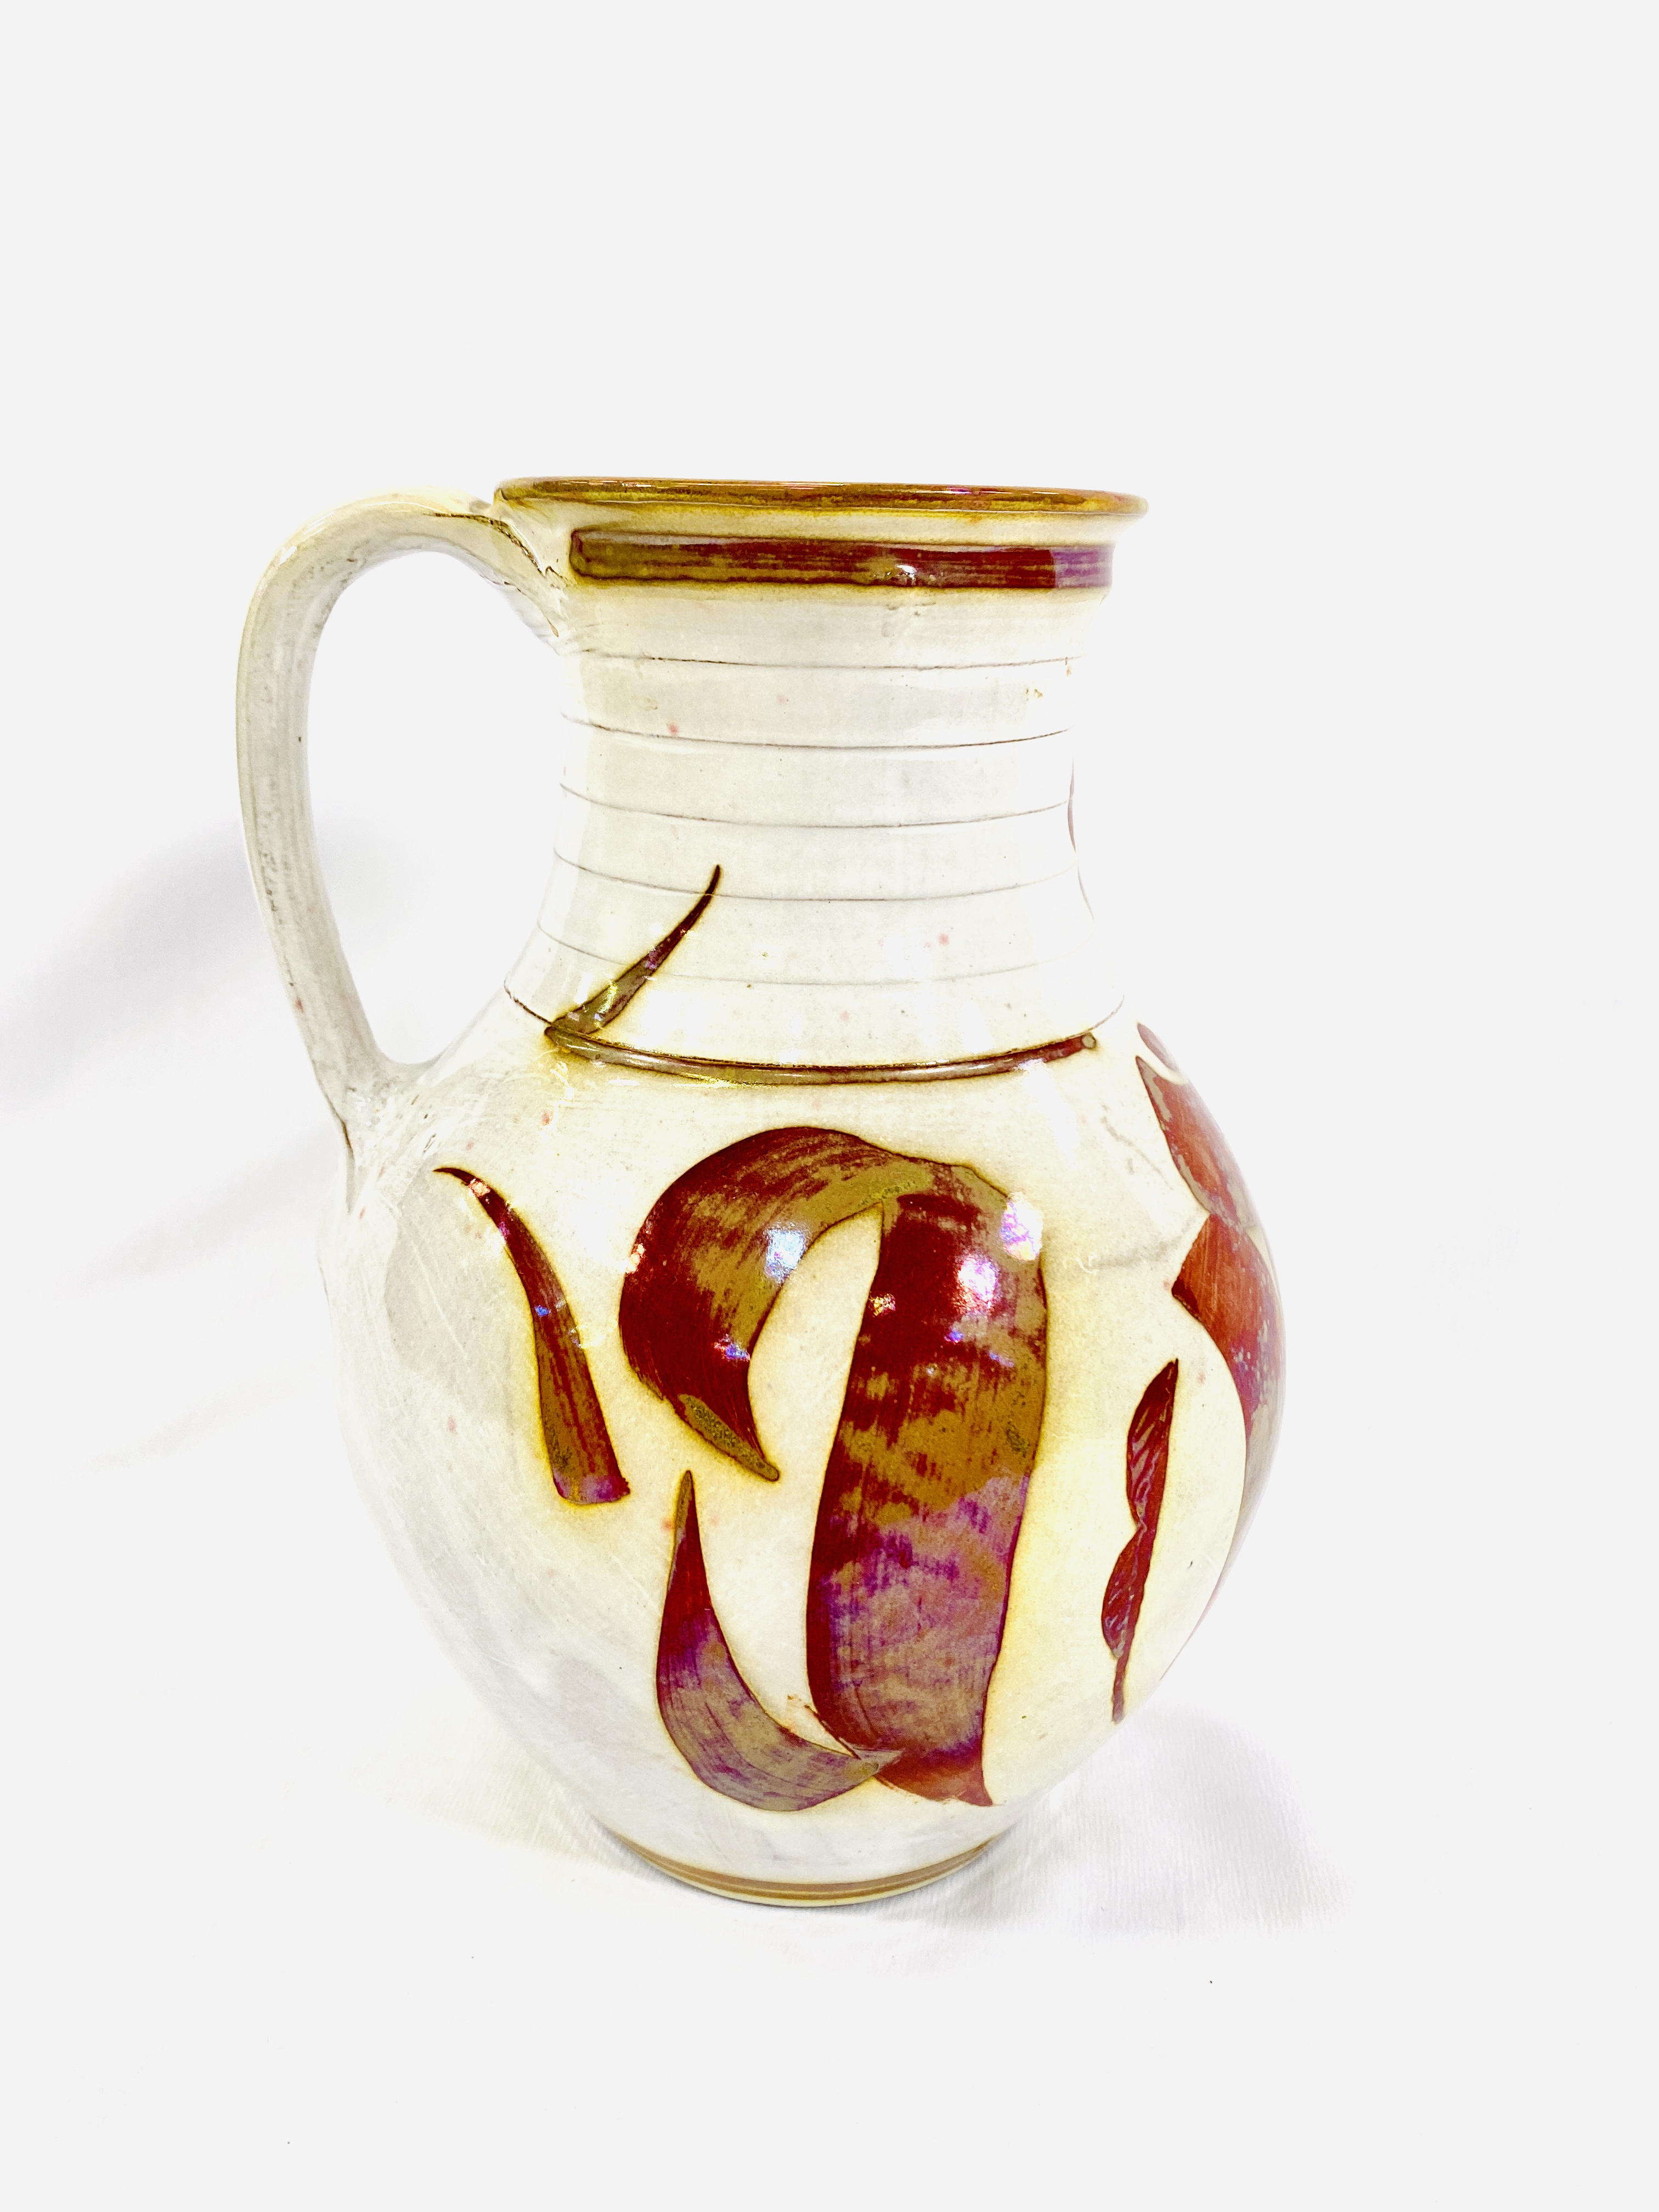 Alan Caiger-Smith - Aldermaston Pottery jug - Image 2 of 5